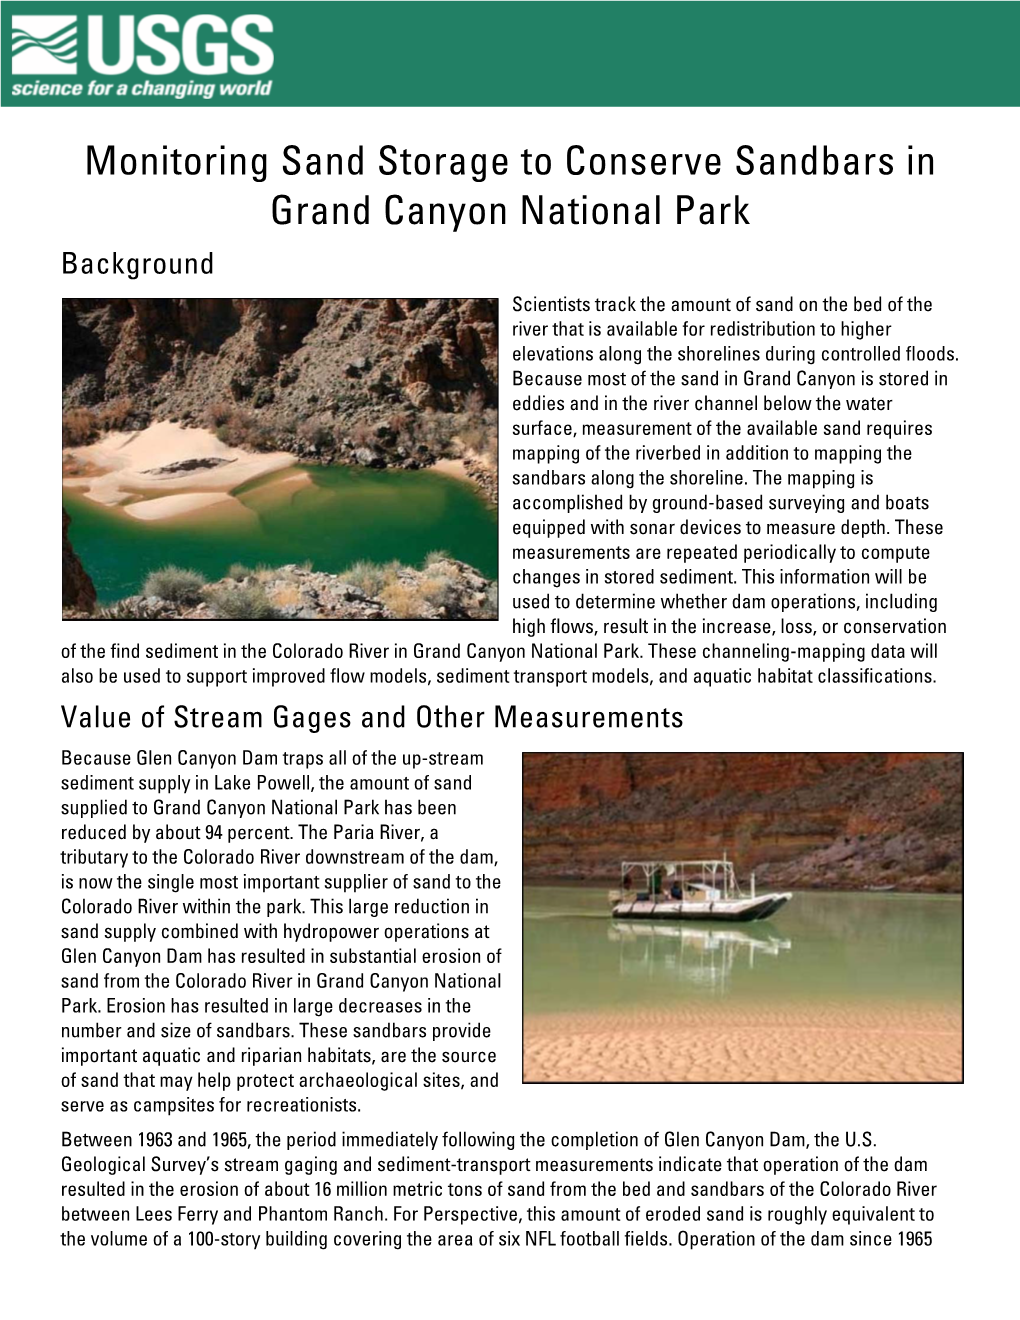 Monitoring Sand Storage to Conserve Sandbars in Grand Canyon